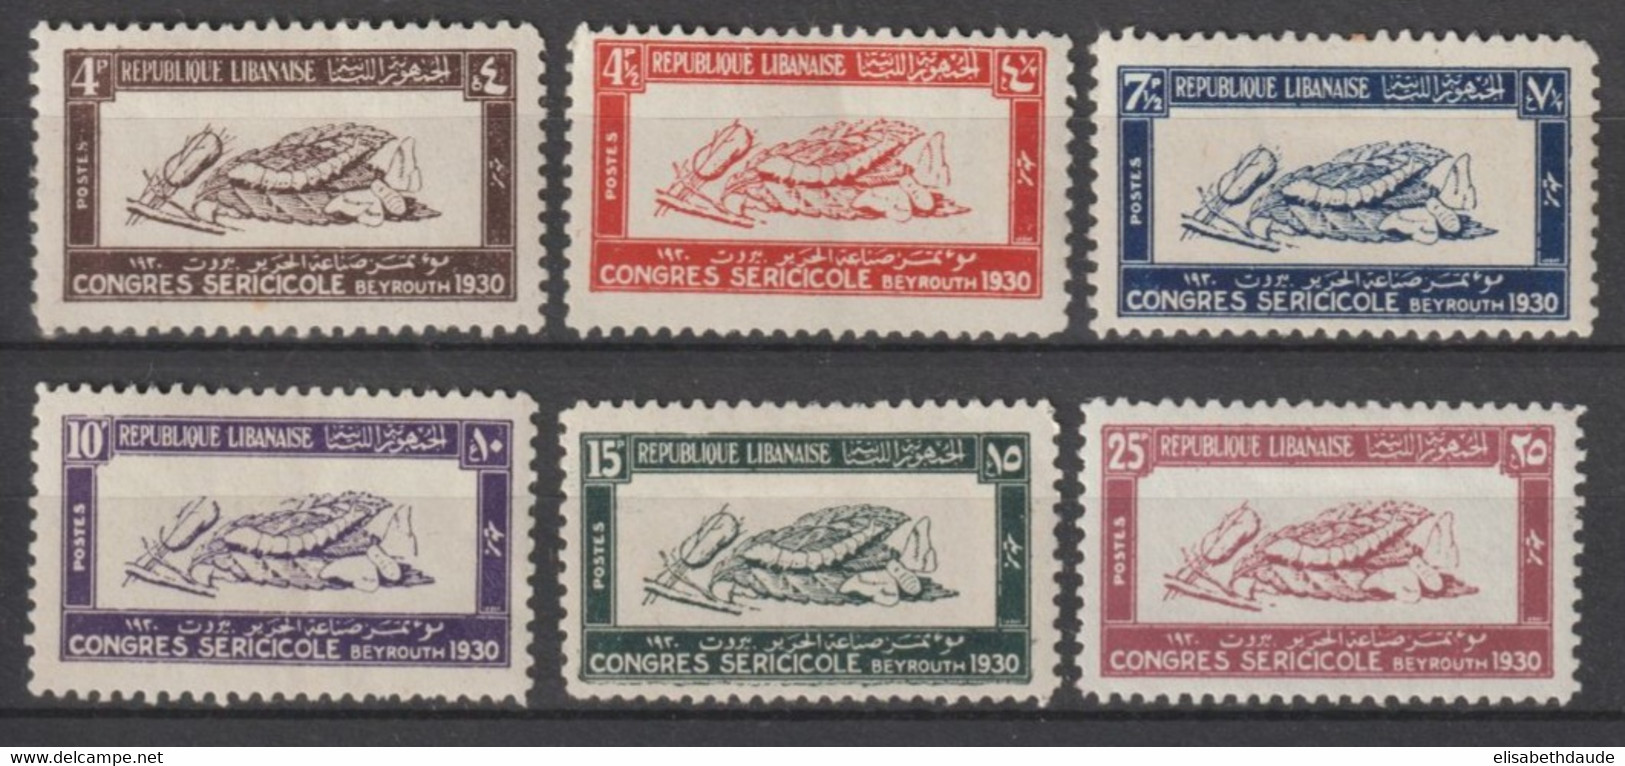 GRAND-LIBAN - 1930 - SERIE COMPLETE CONGRES SERICOLE - YVERT N°122/127 * MH - COTE = 104 EUR. - Nuovi